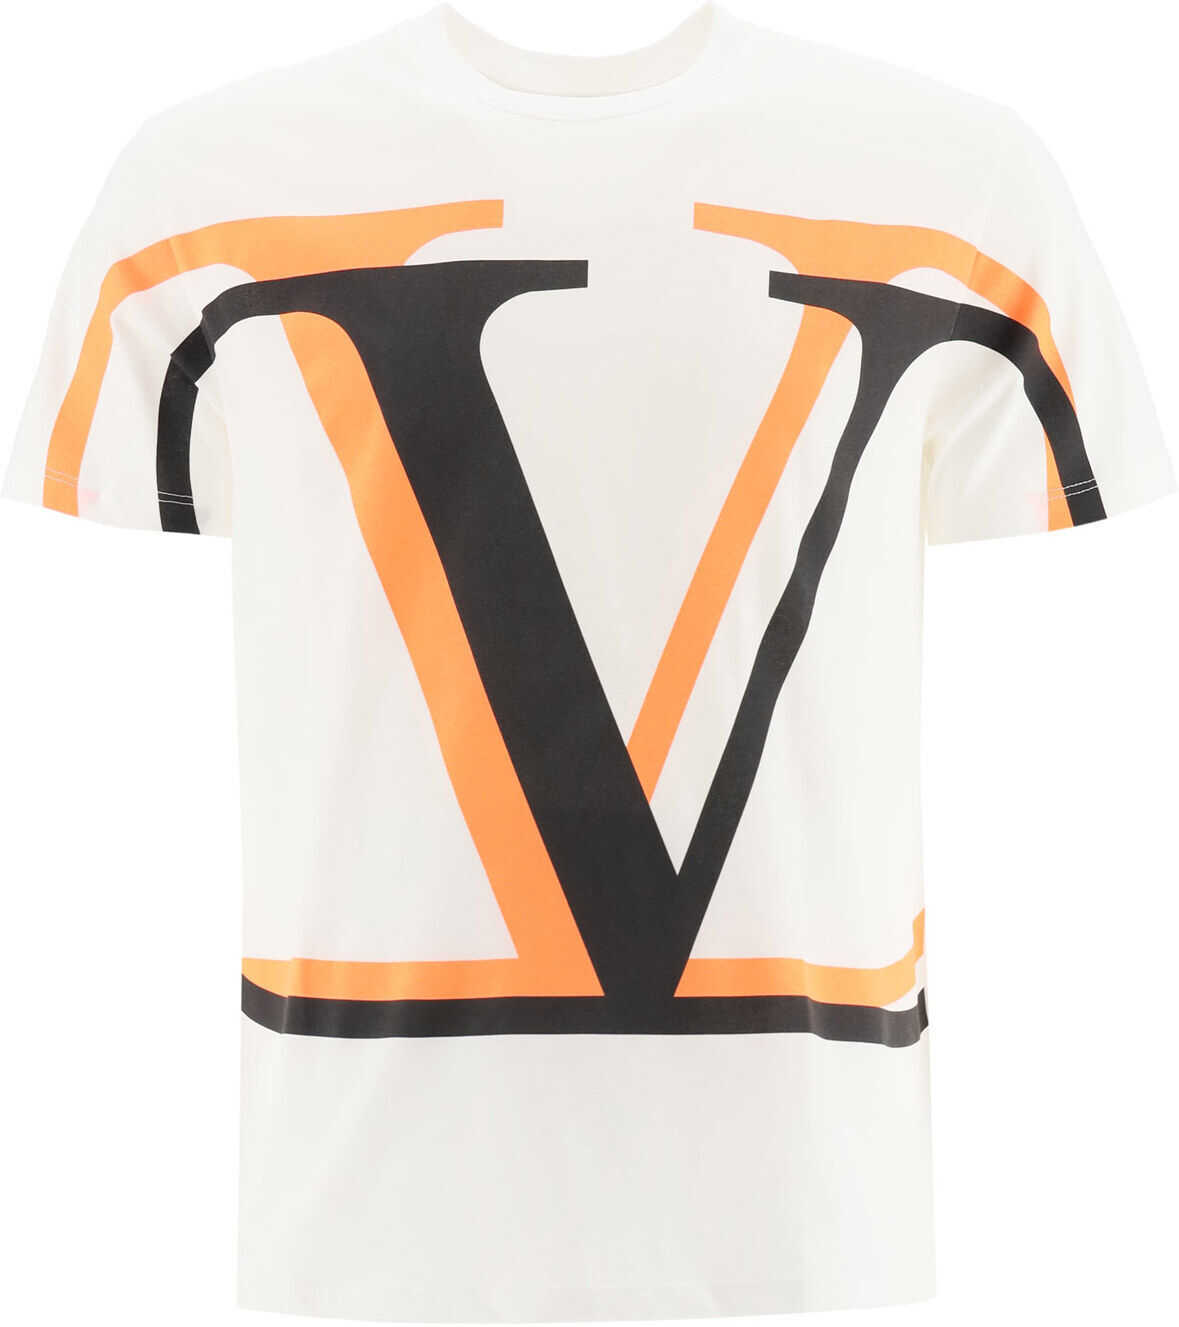 Valentino Garavani Vlogo Shadow Print T-Shirt BIANCO LOGO NERO OMBRA ORANGE FLUO